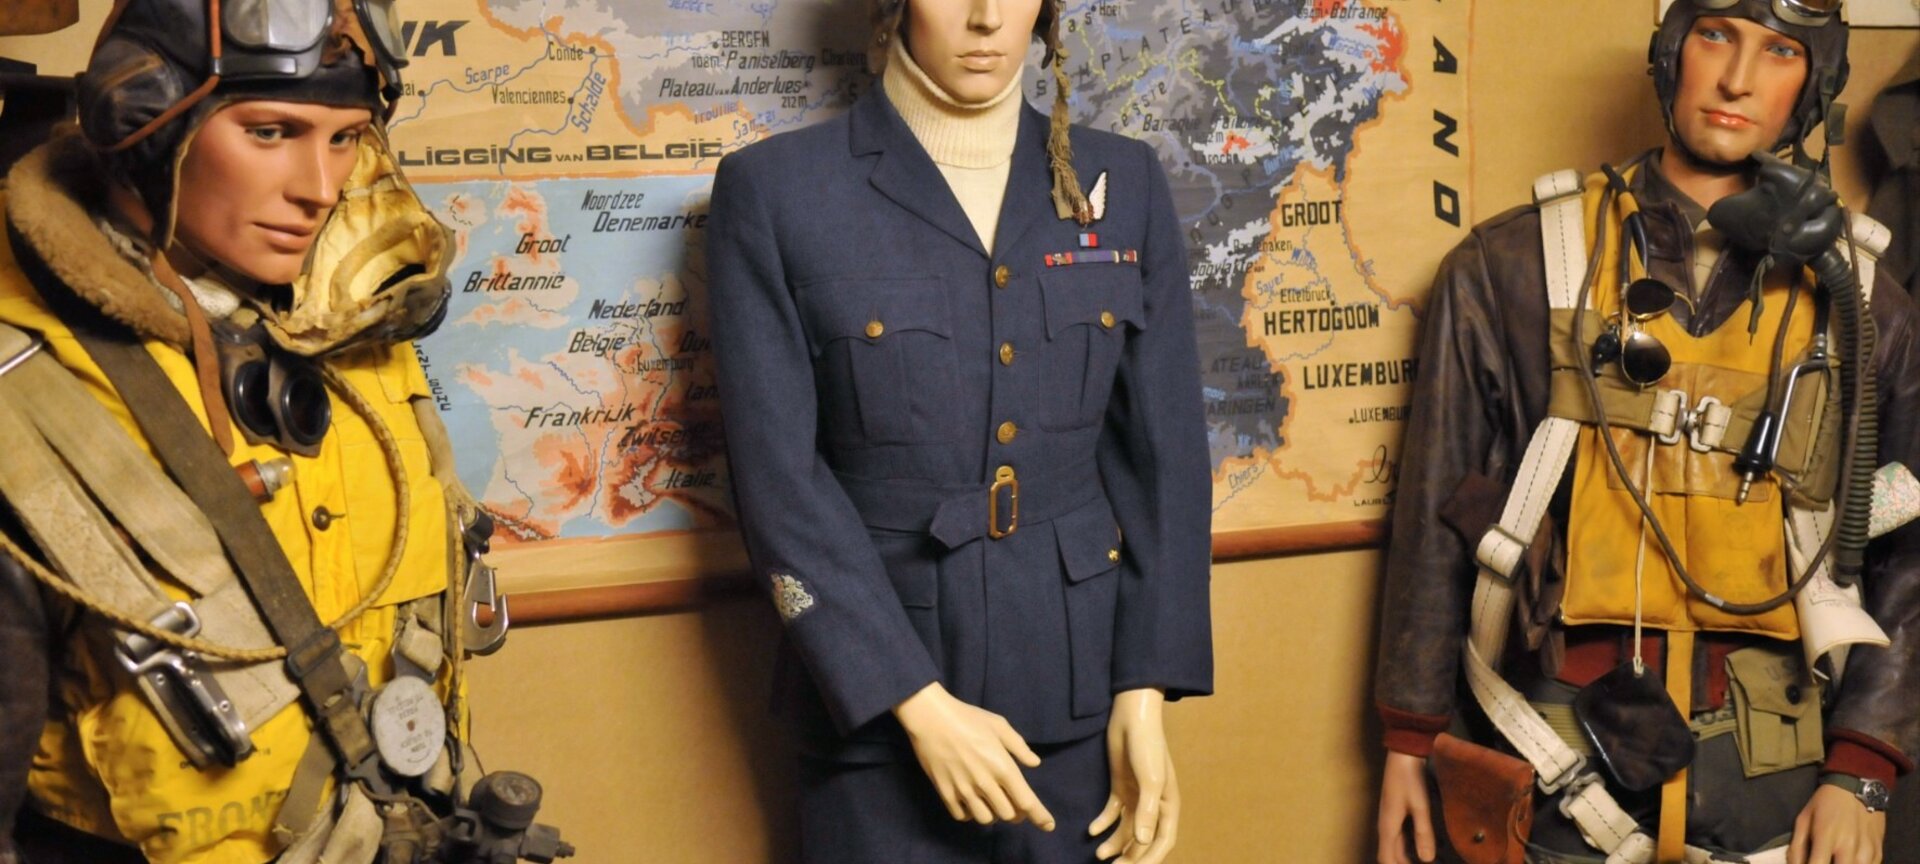 Museum Winter 1944 - Piloten 